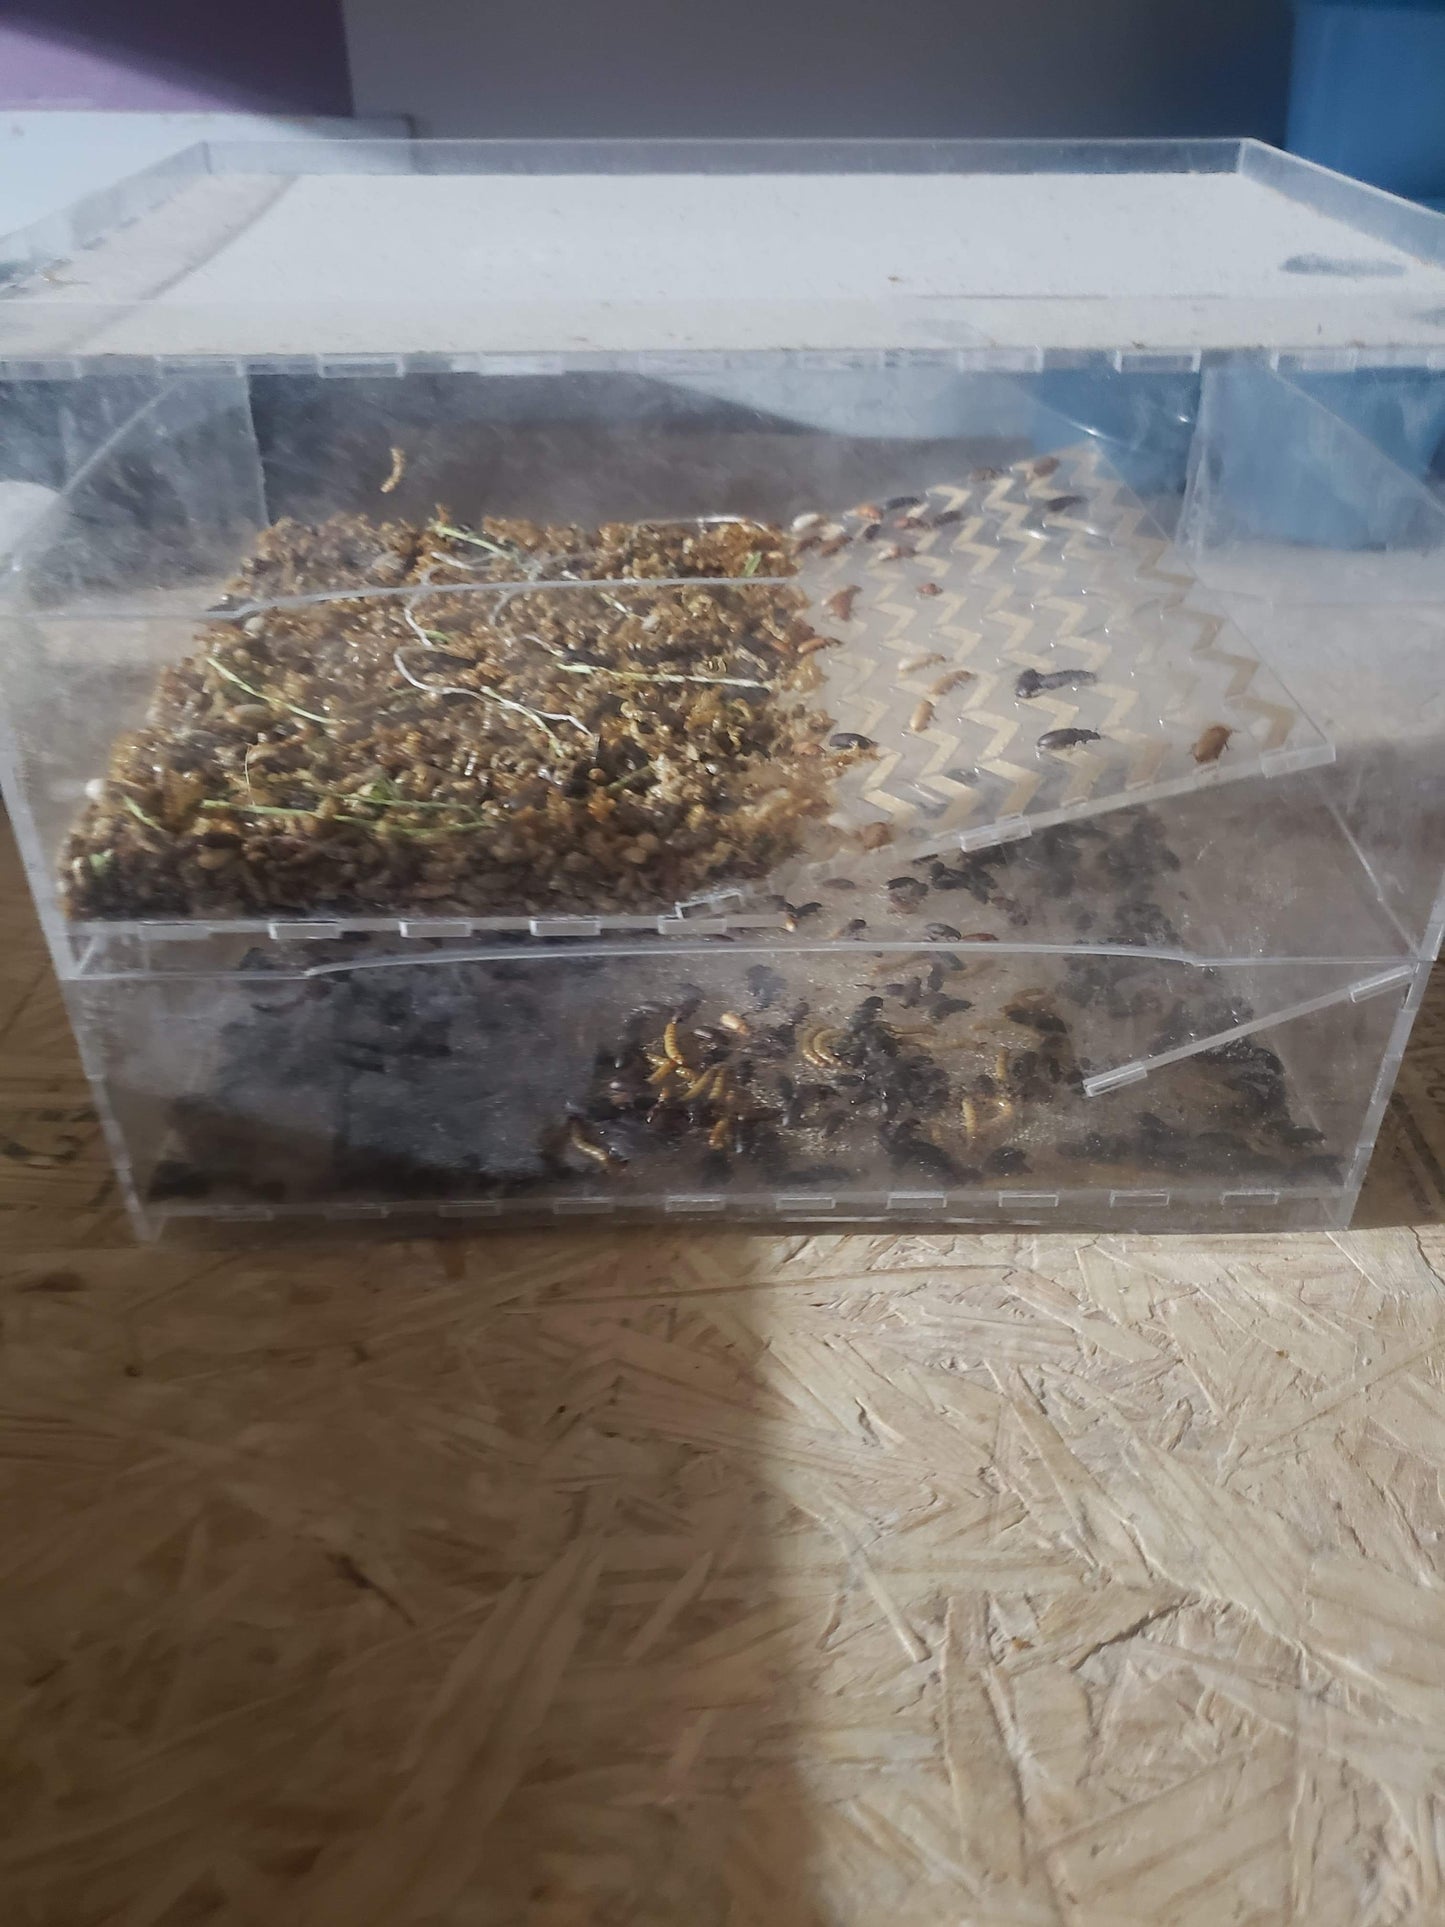 Beetle Self-Sorting Tray